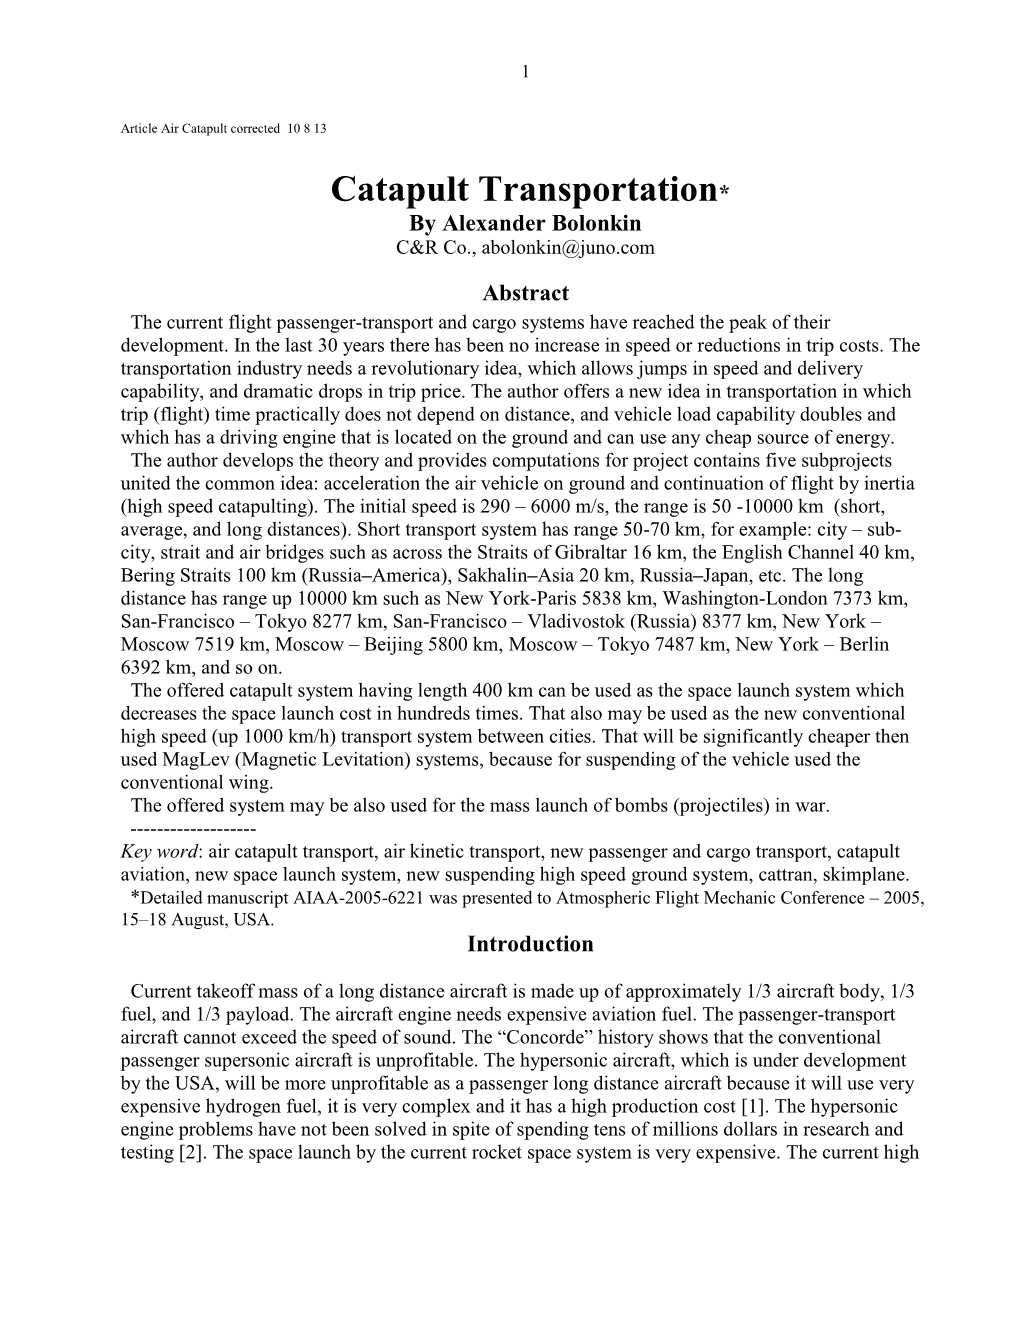 Article Air Catapult Transport 10 29 11